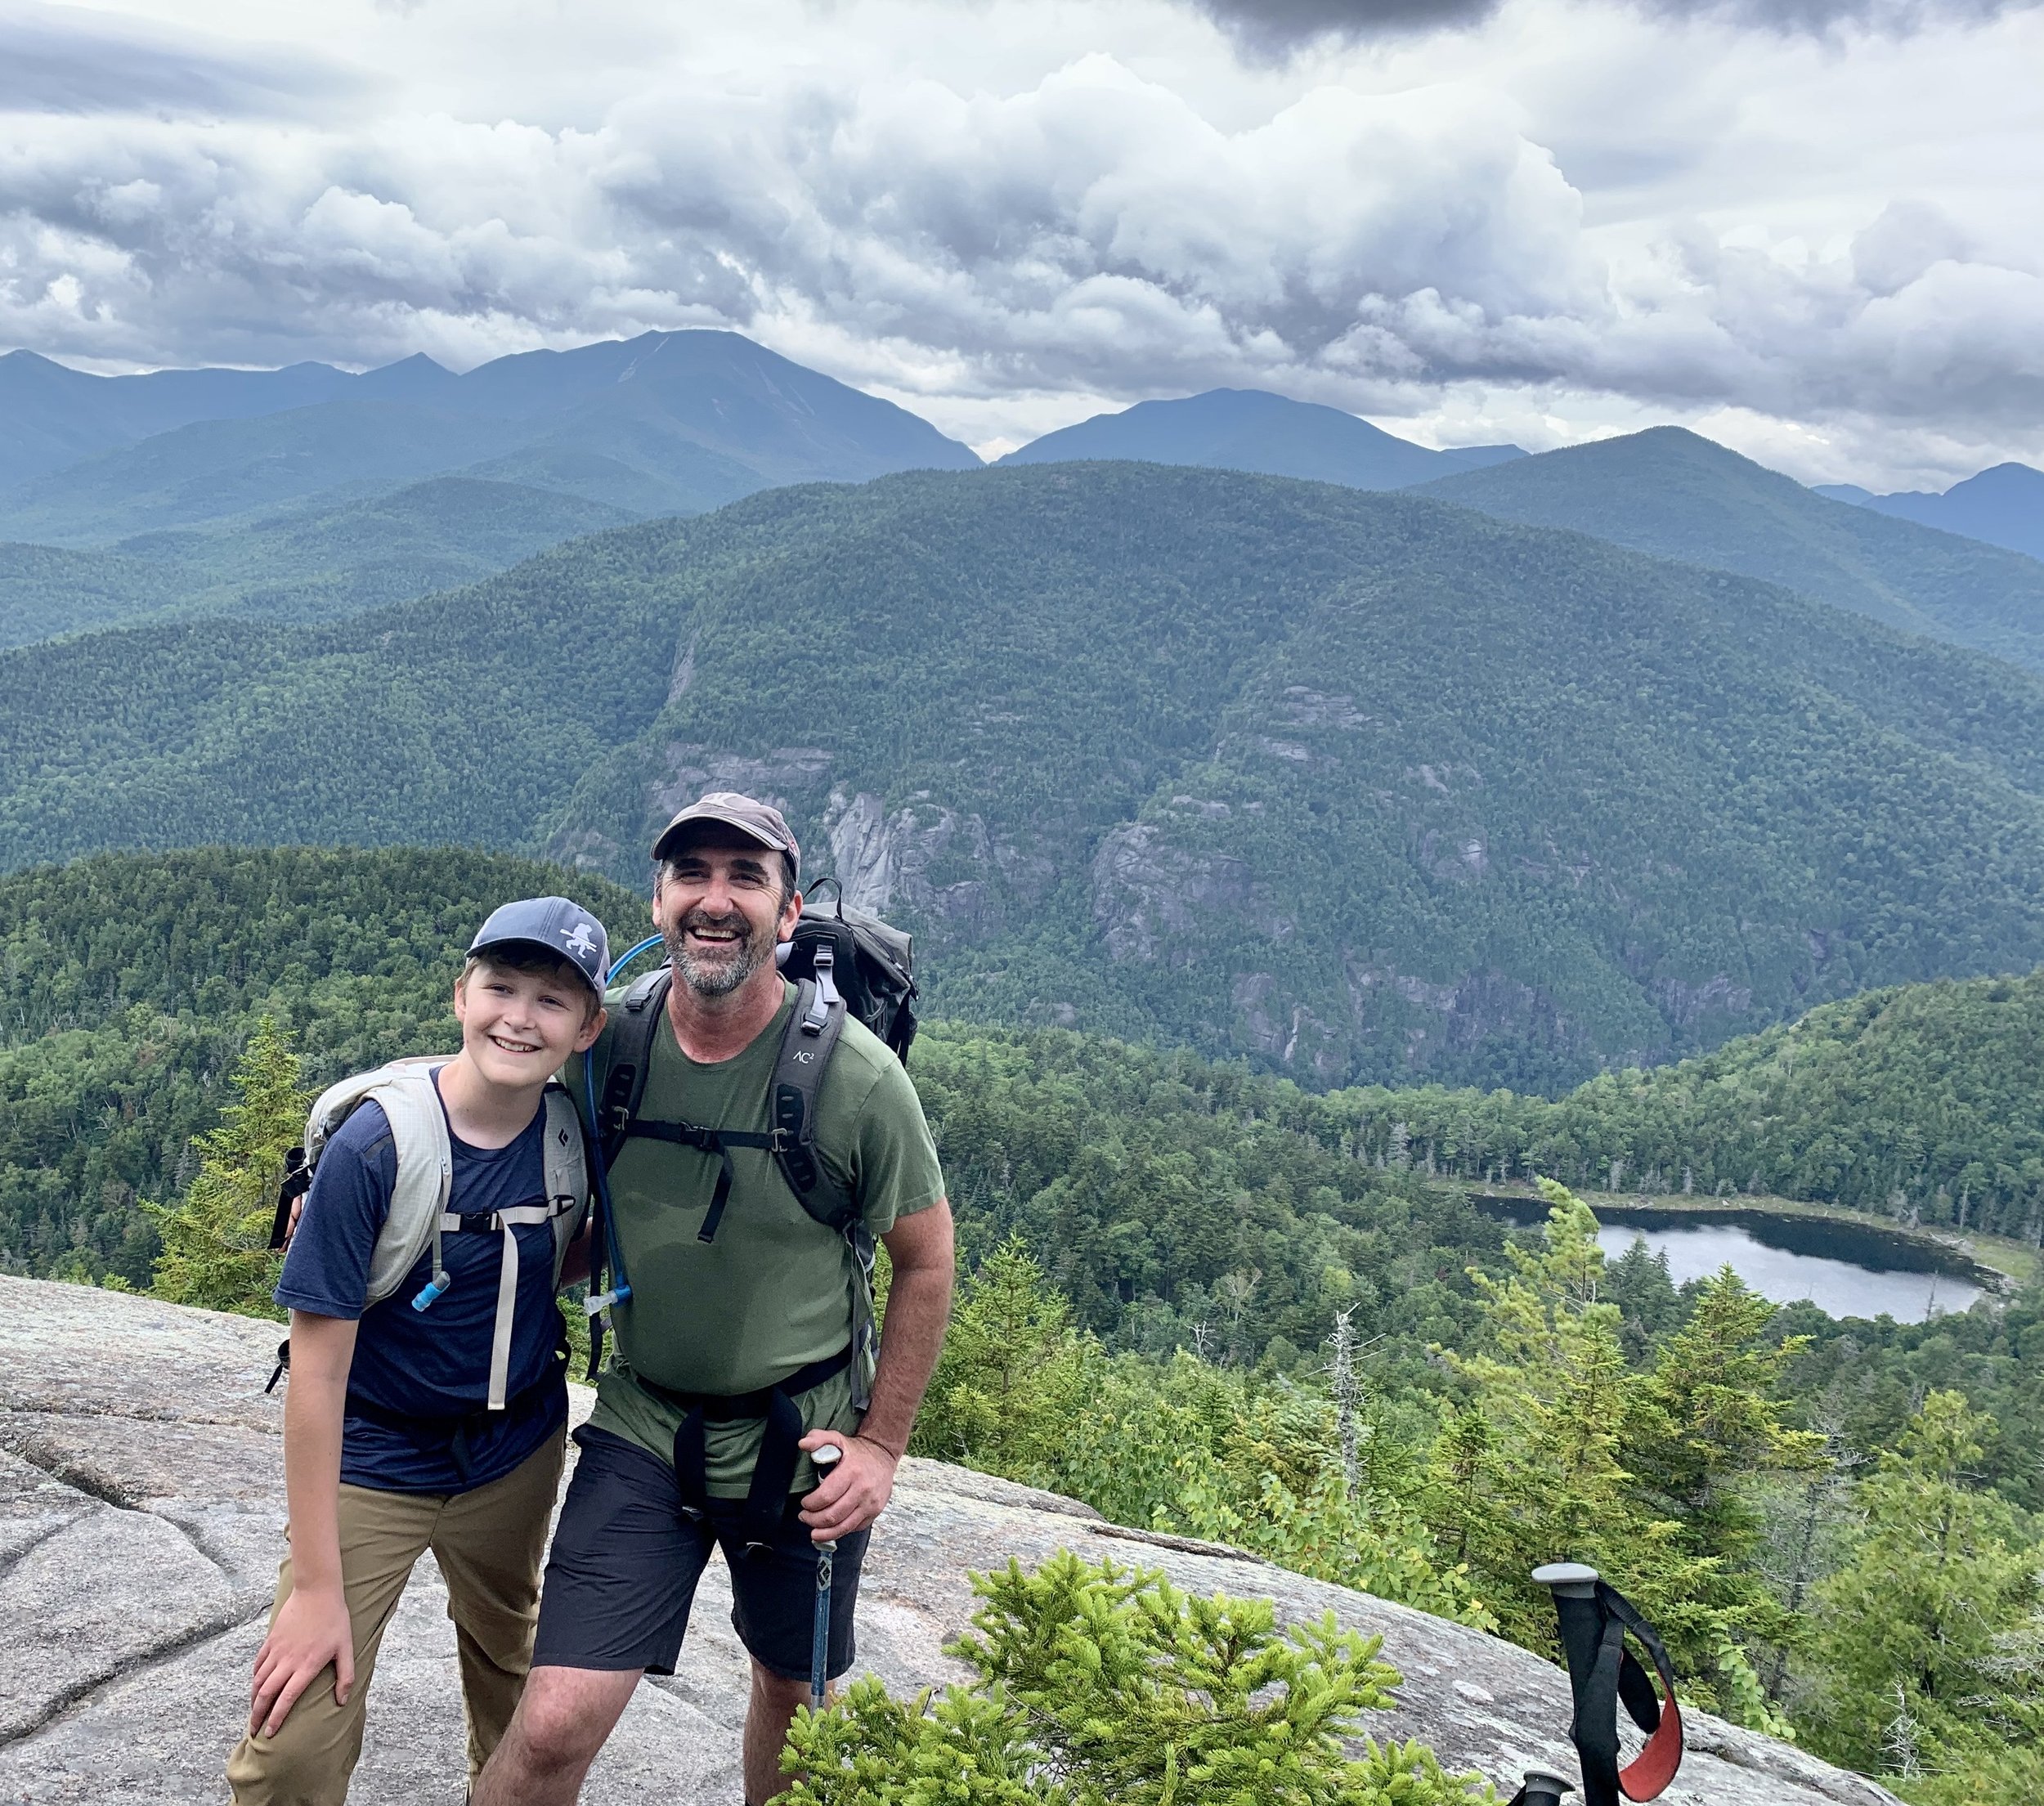 Père et fils, Giant Mountain, Adirondacks, août 2022.